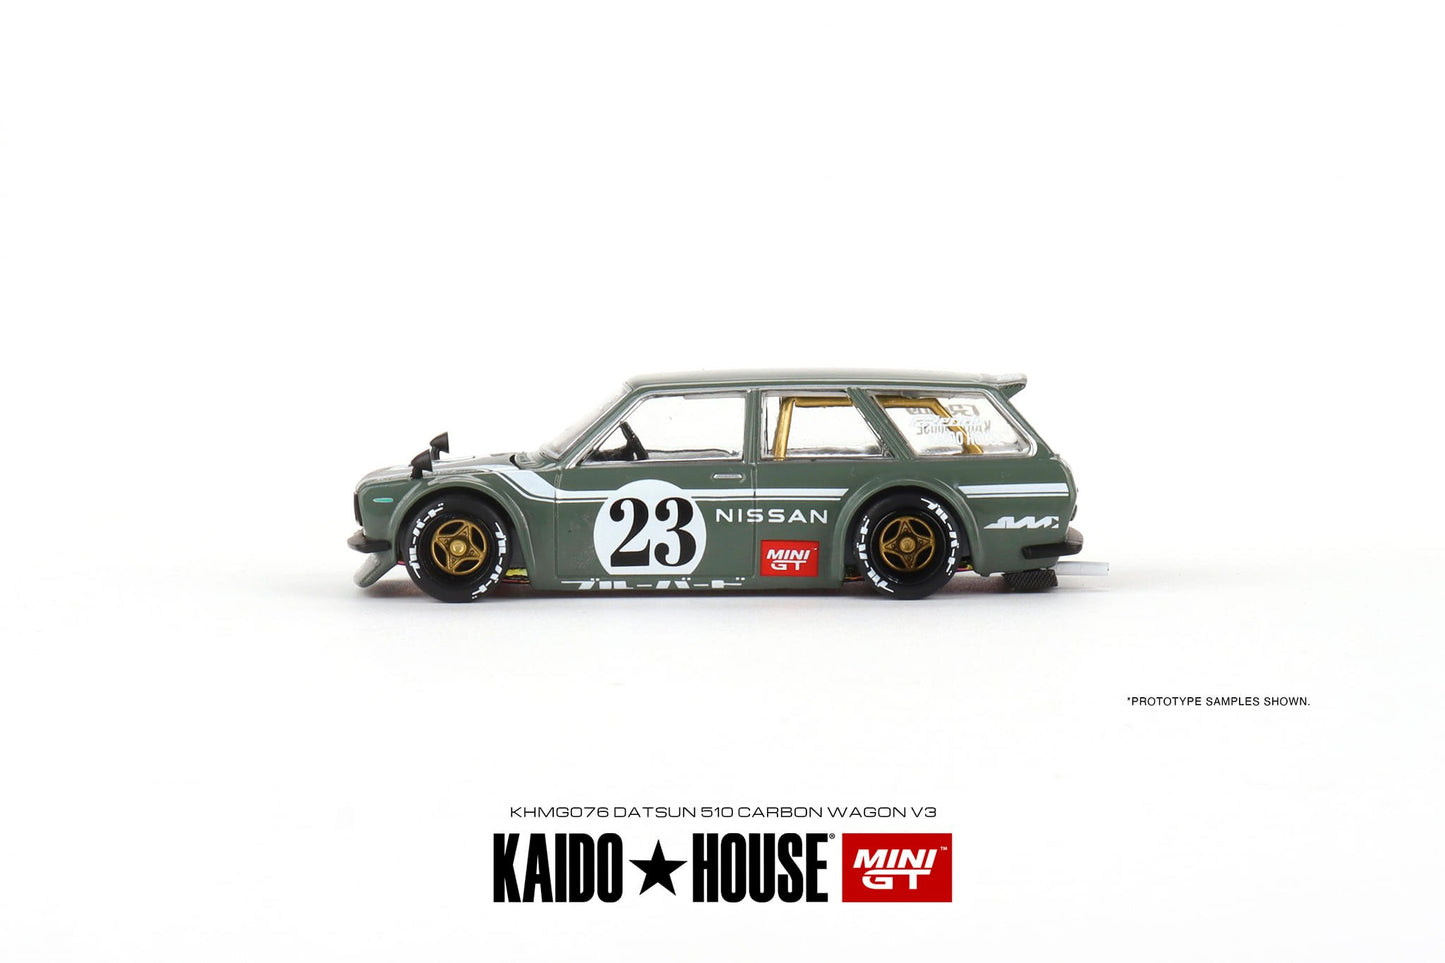 Mini GT x Kaido House Datsun 510 Carbon Fiber V3 in Green